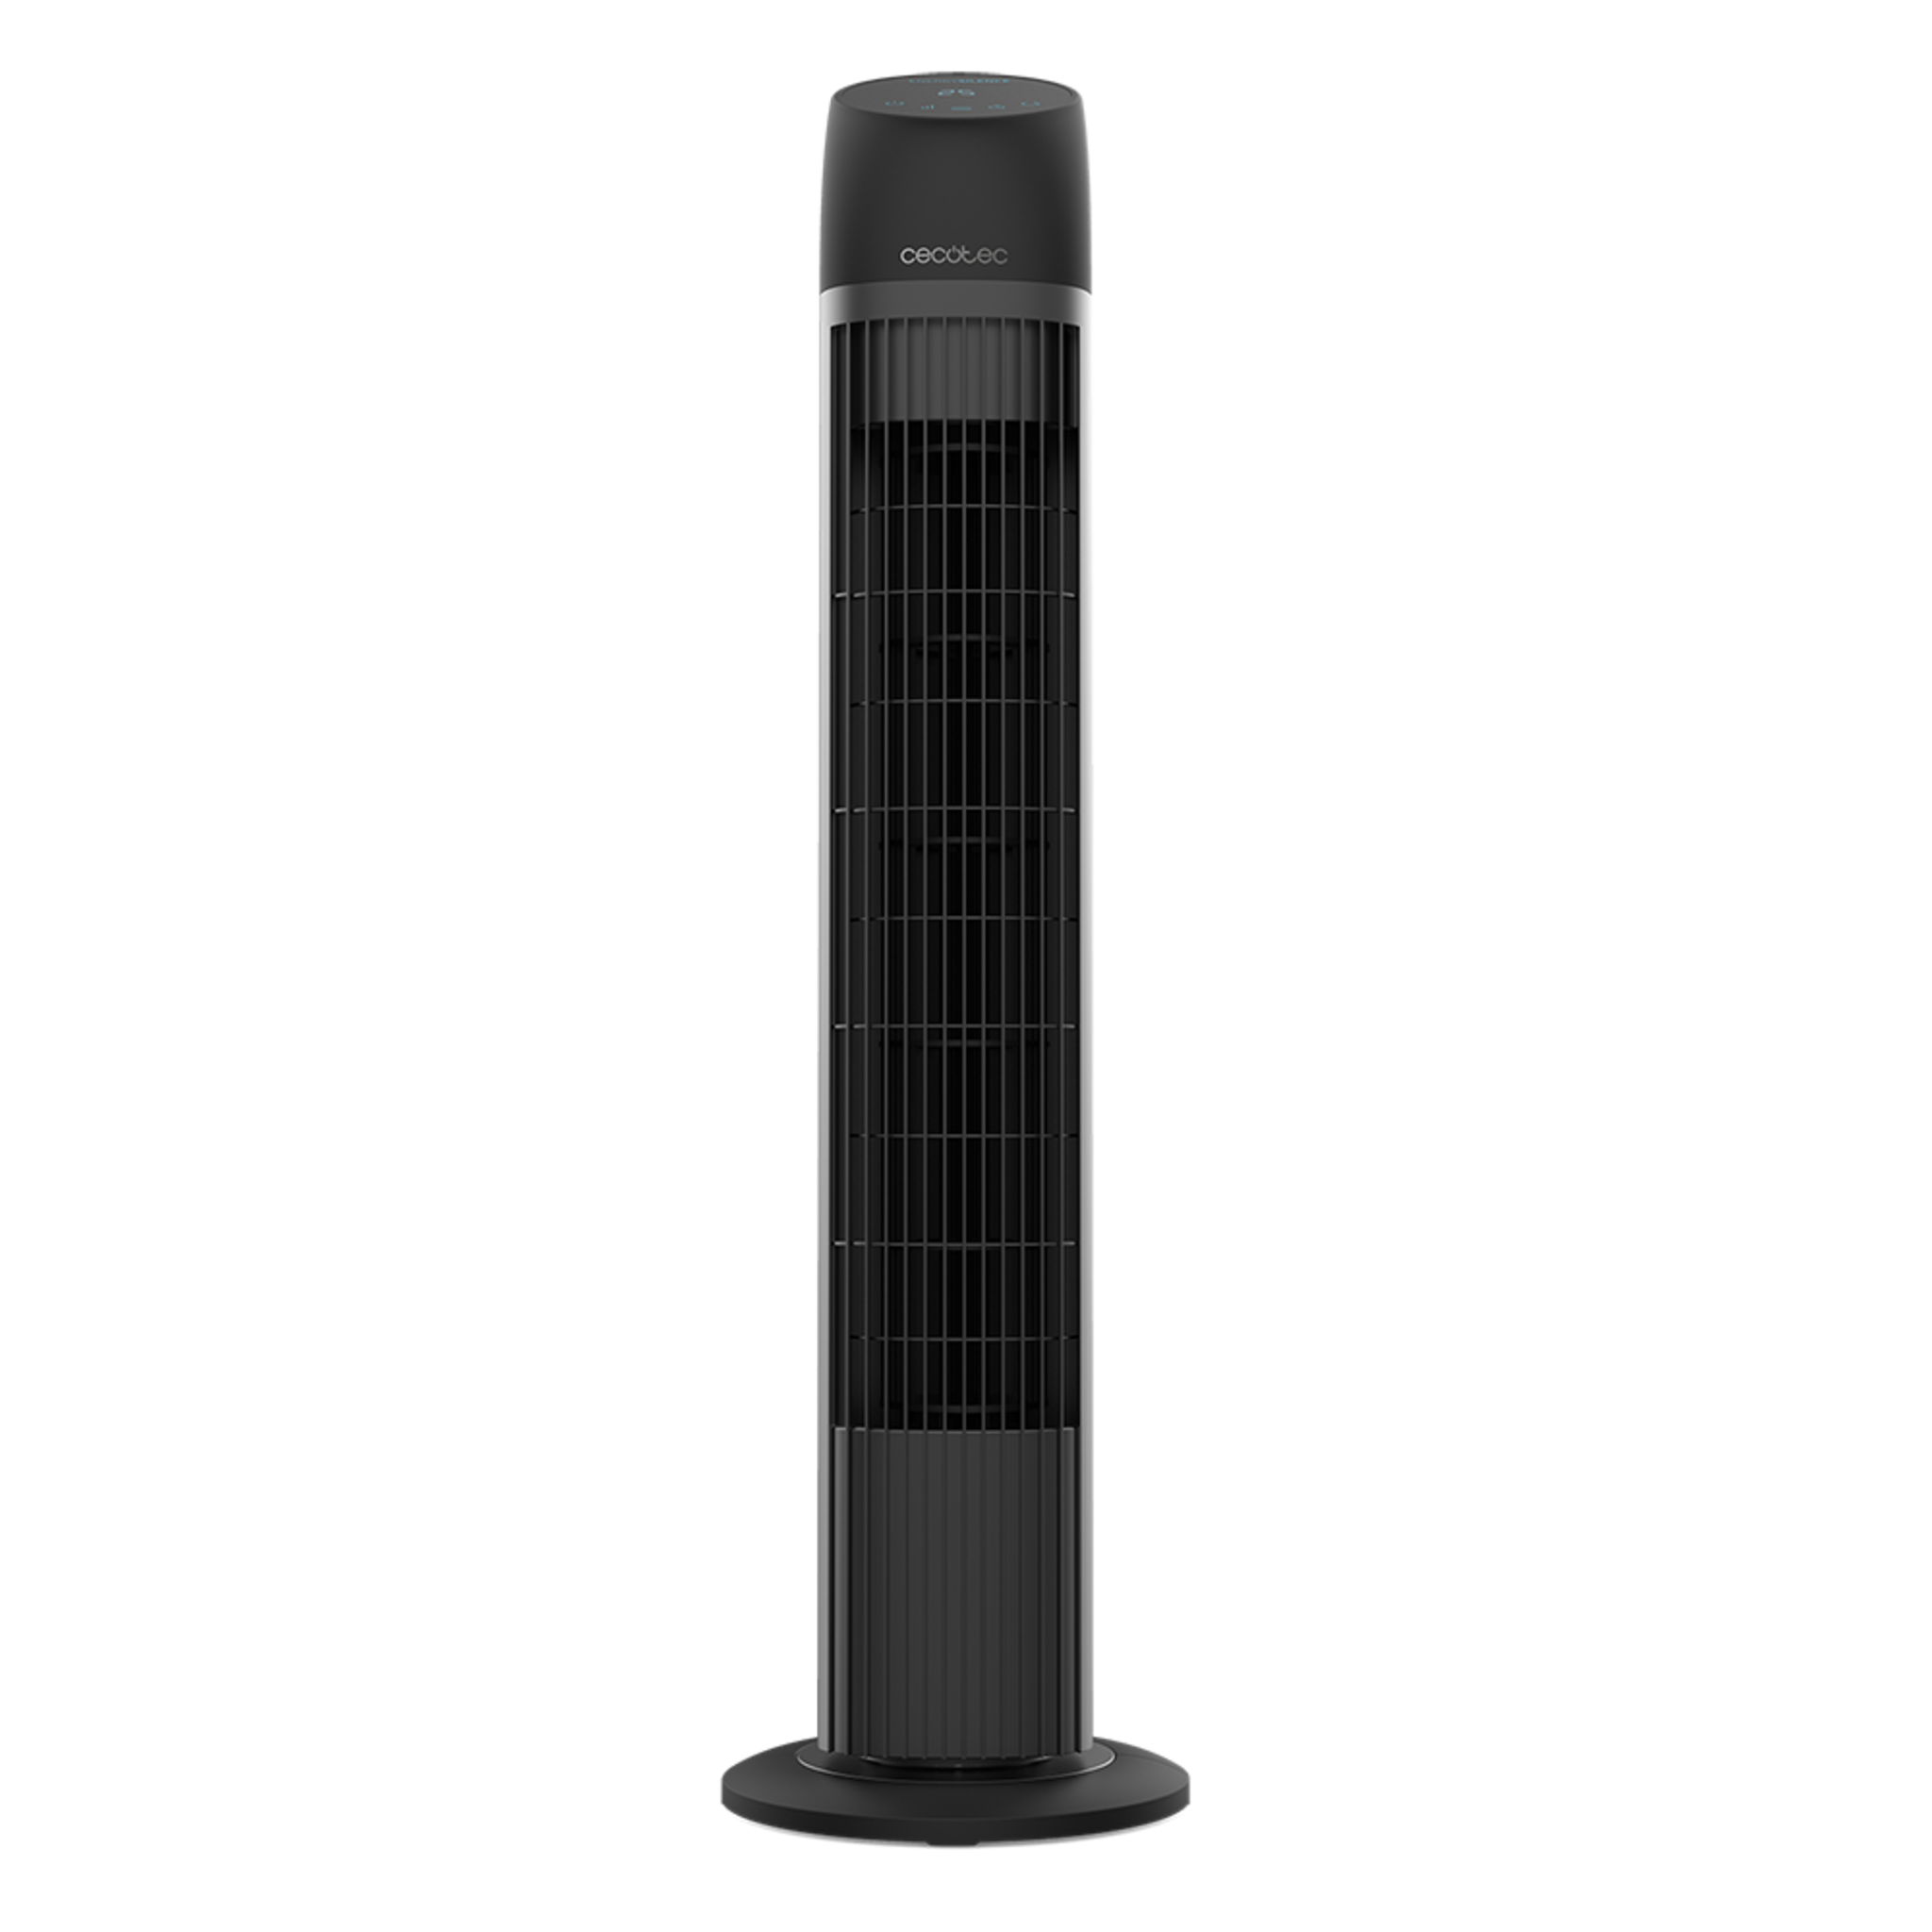 EnergySilence 8050 SkyLine Smart Digitaler Turmventilator, 3 Geschwindigkeiten, 3 Modi, Timer 7,5h, leise, Kupfermotor, weiß, 50 W, schwarz